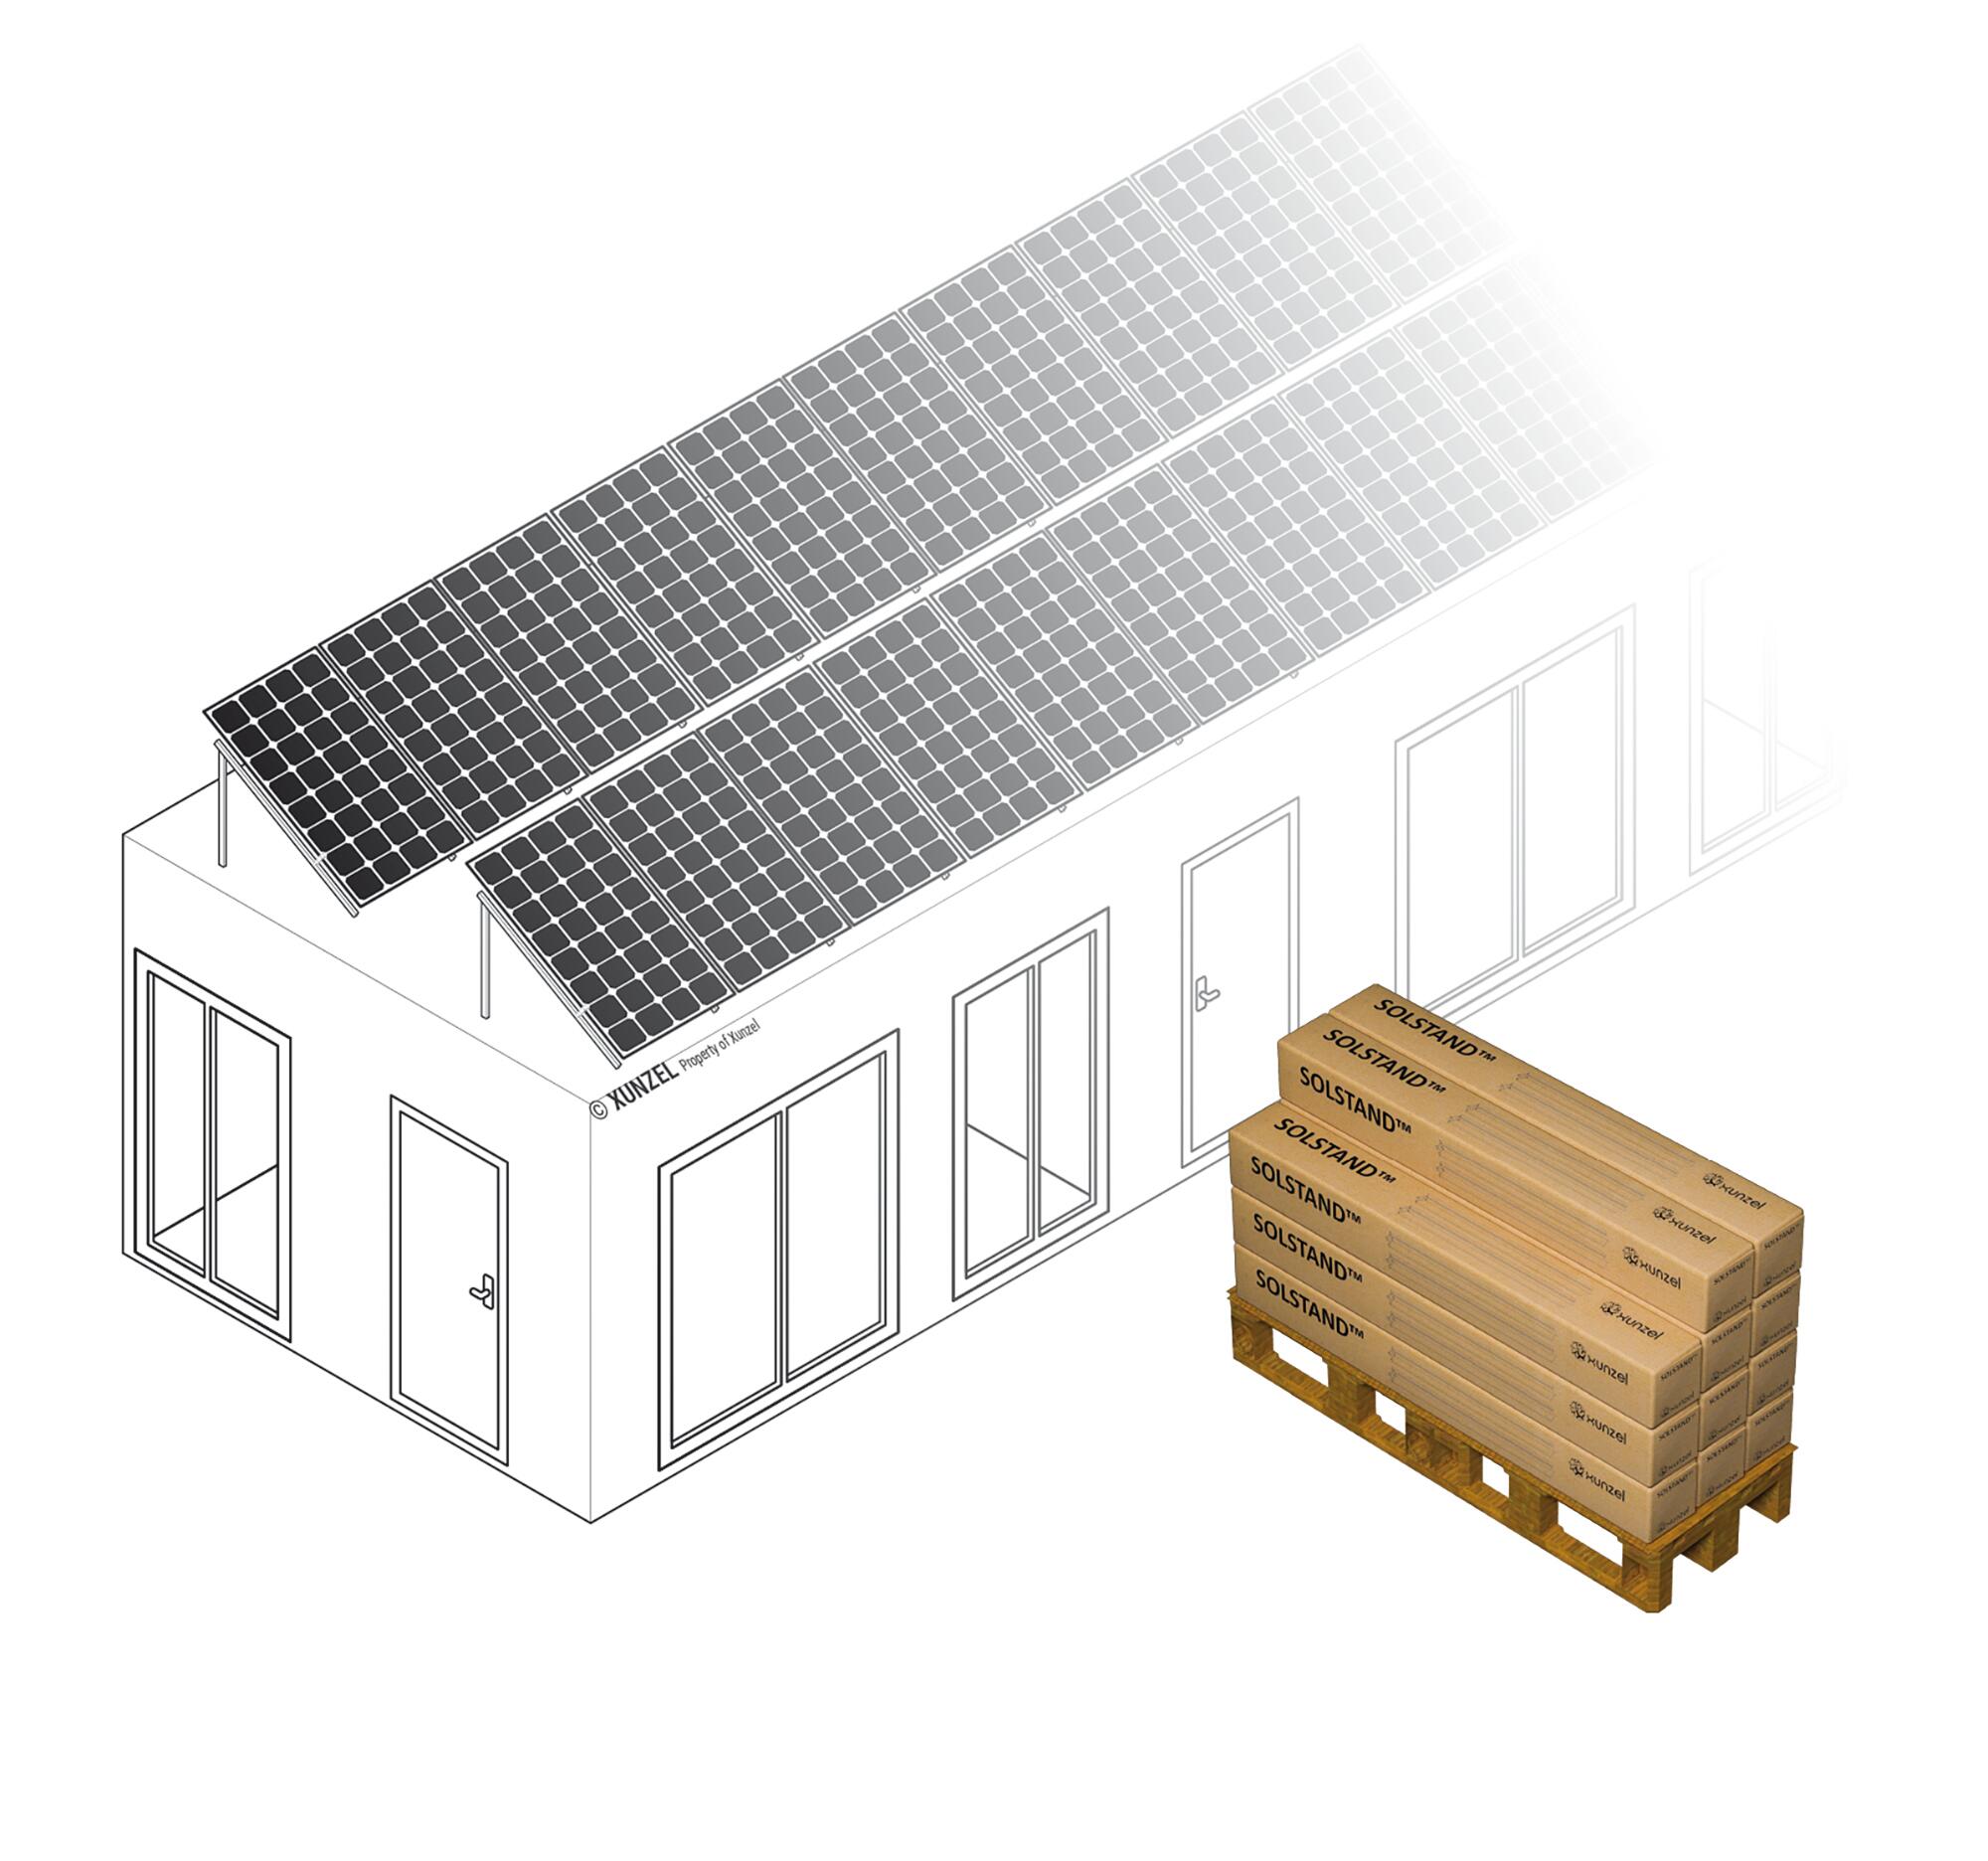 Soporte suelo/cubierta plana solstand-42g-xxl para 42 paneles solarpower-425w